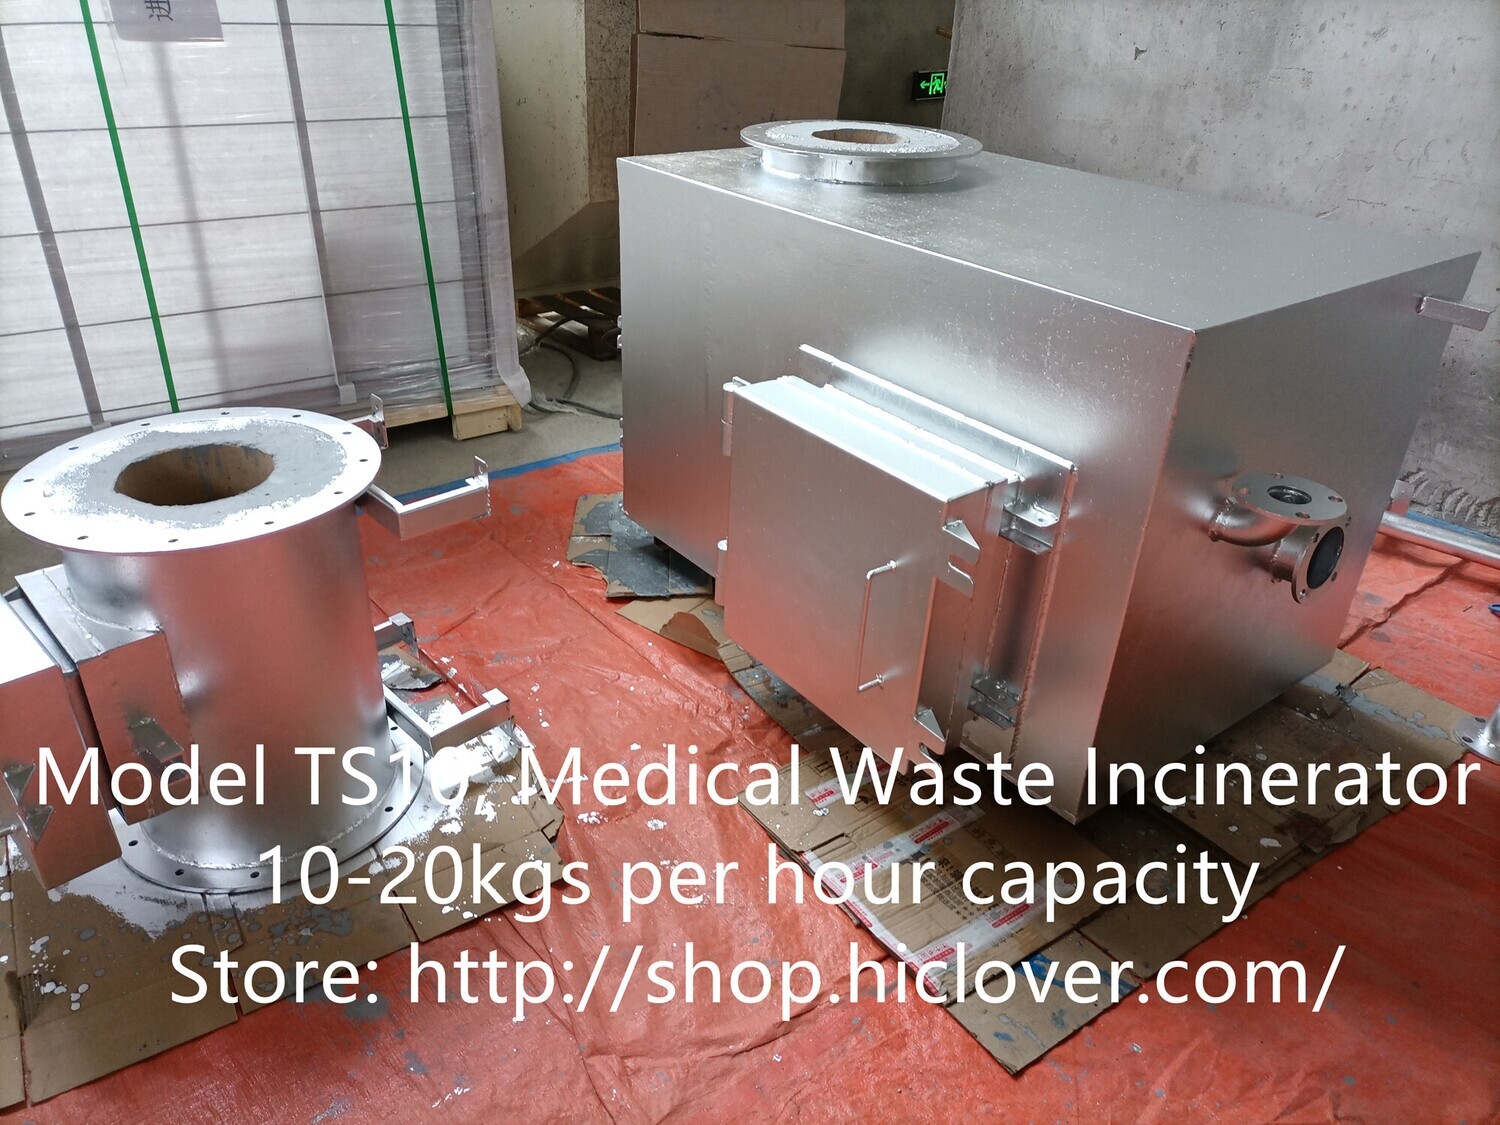 Model: TS10, Medical Waste Incinerator 10-20kgs per hour capacity